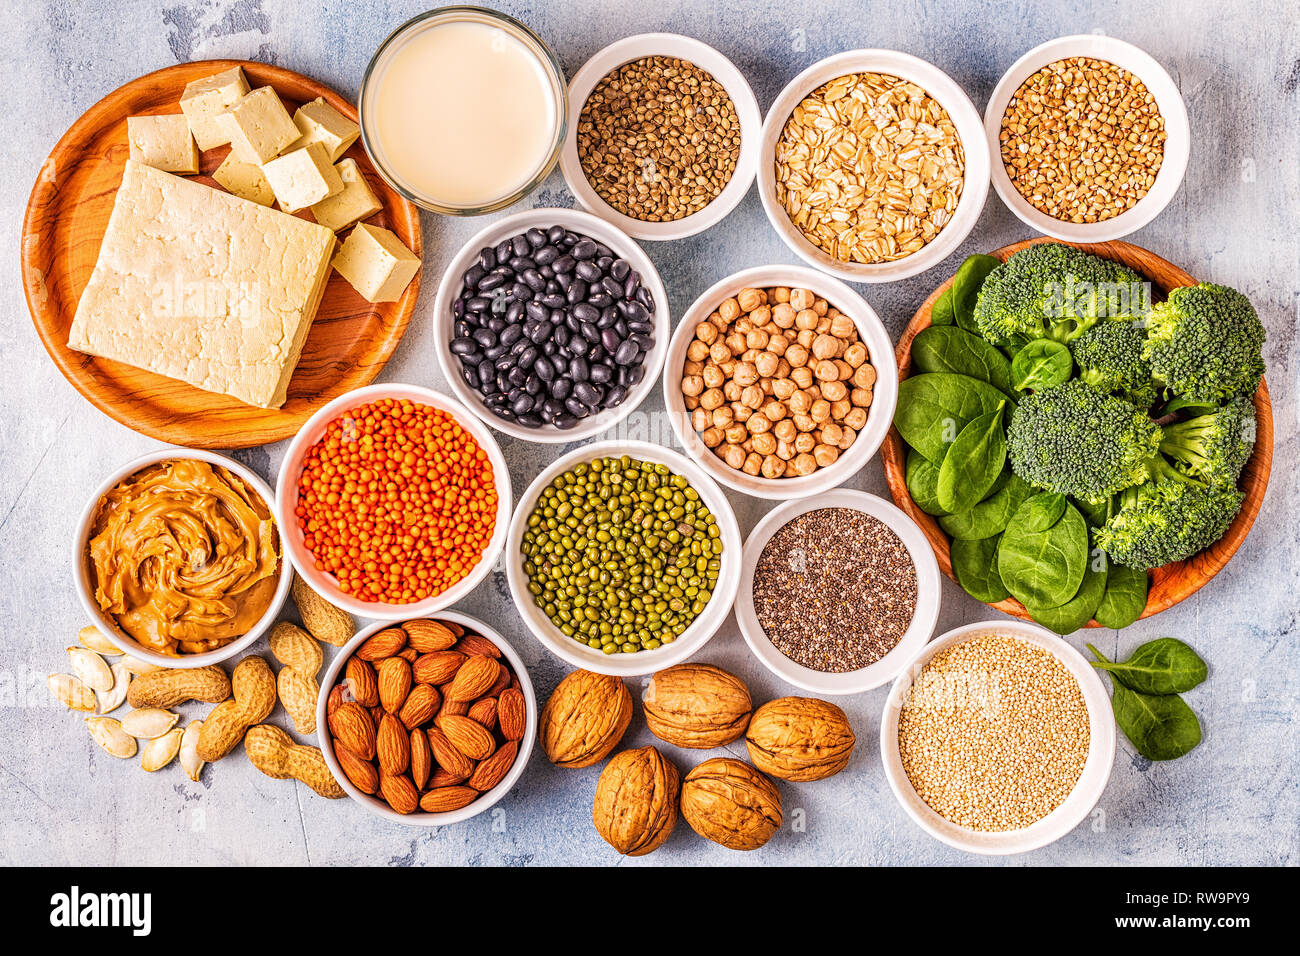 Healthy diet vegan food, veggie protein sources. Top view. Stock Photo